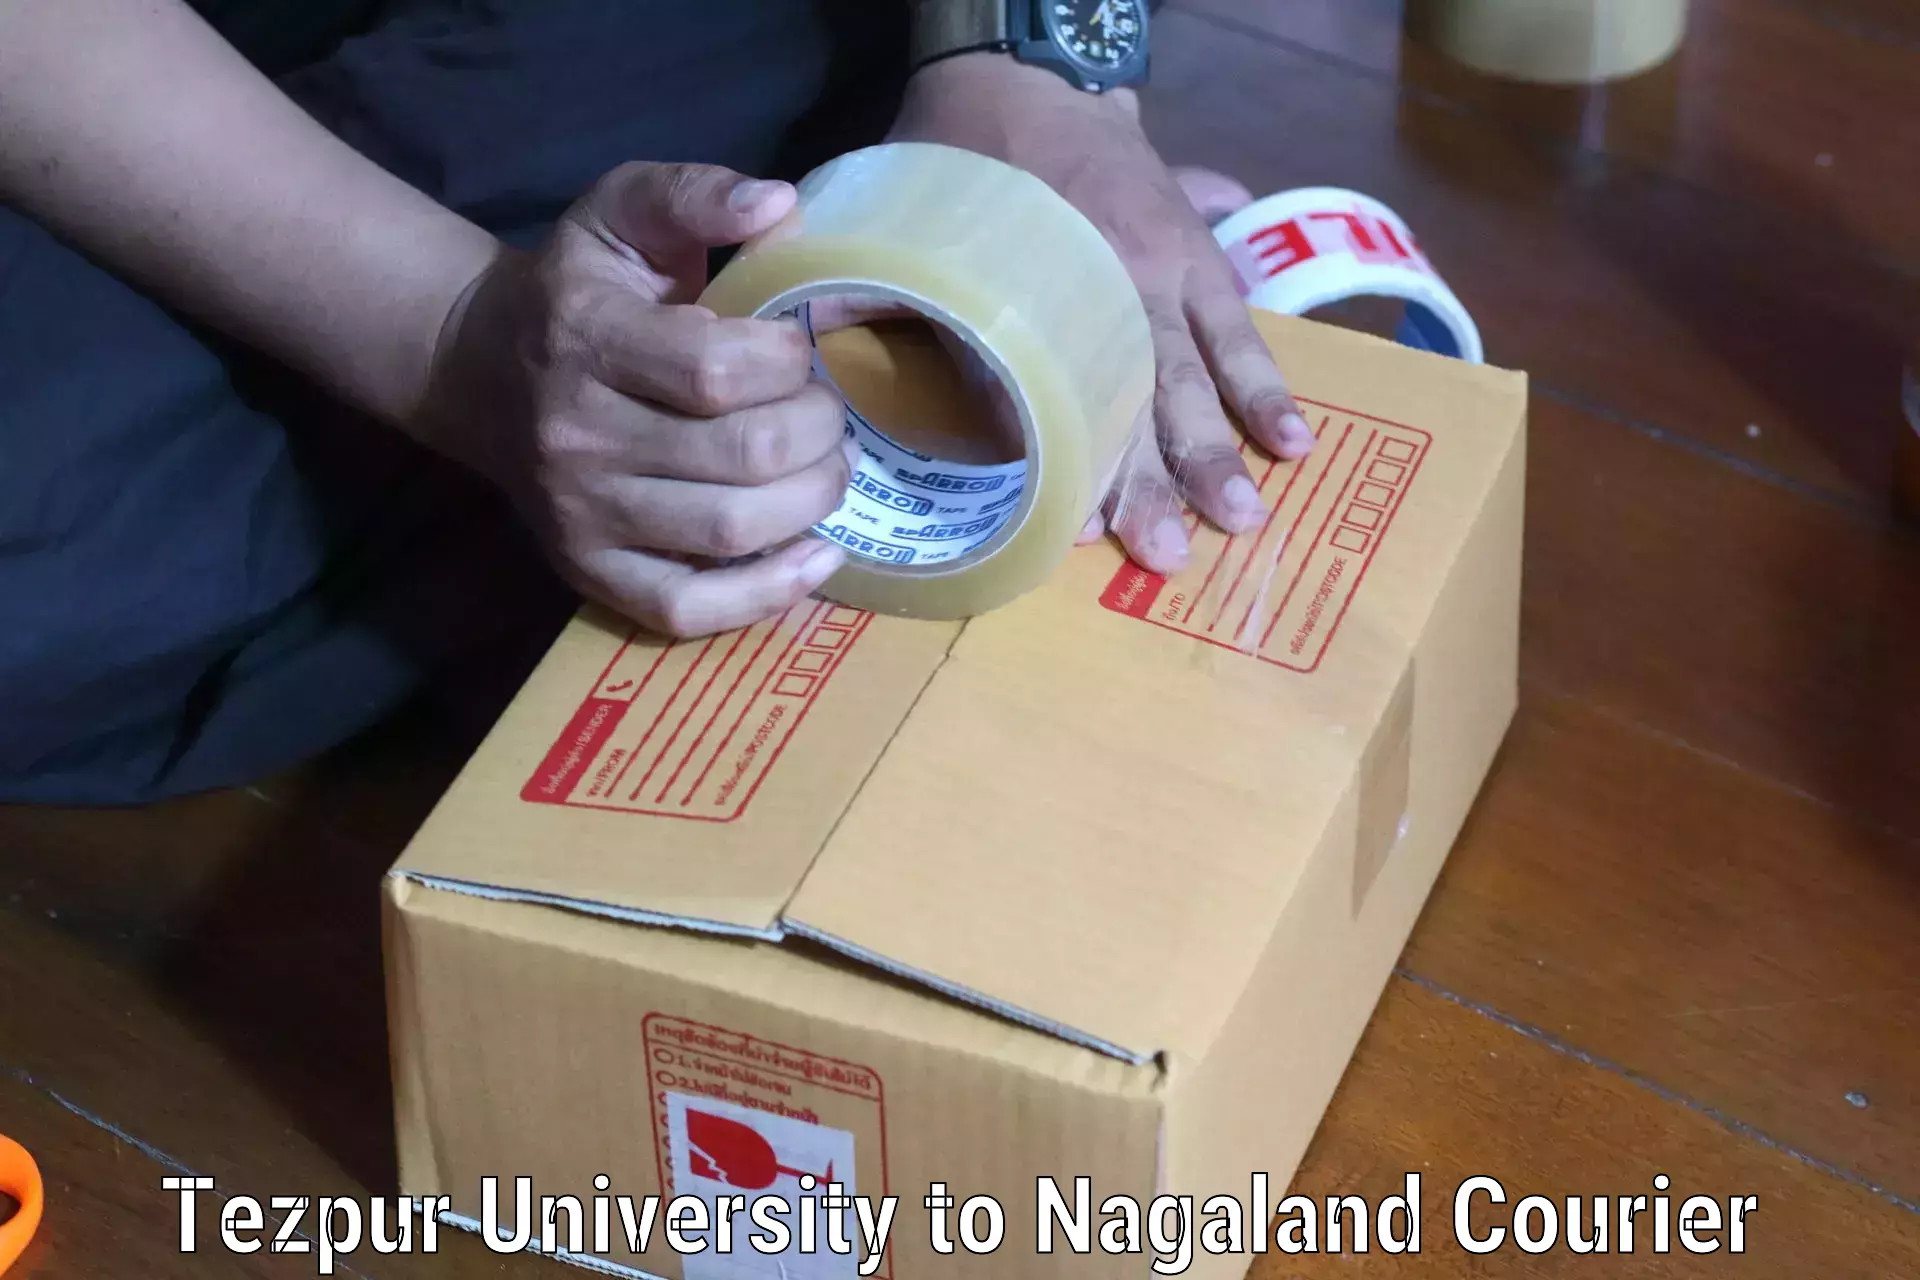 Courier service comparison in Tezpur University to Dimapur